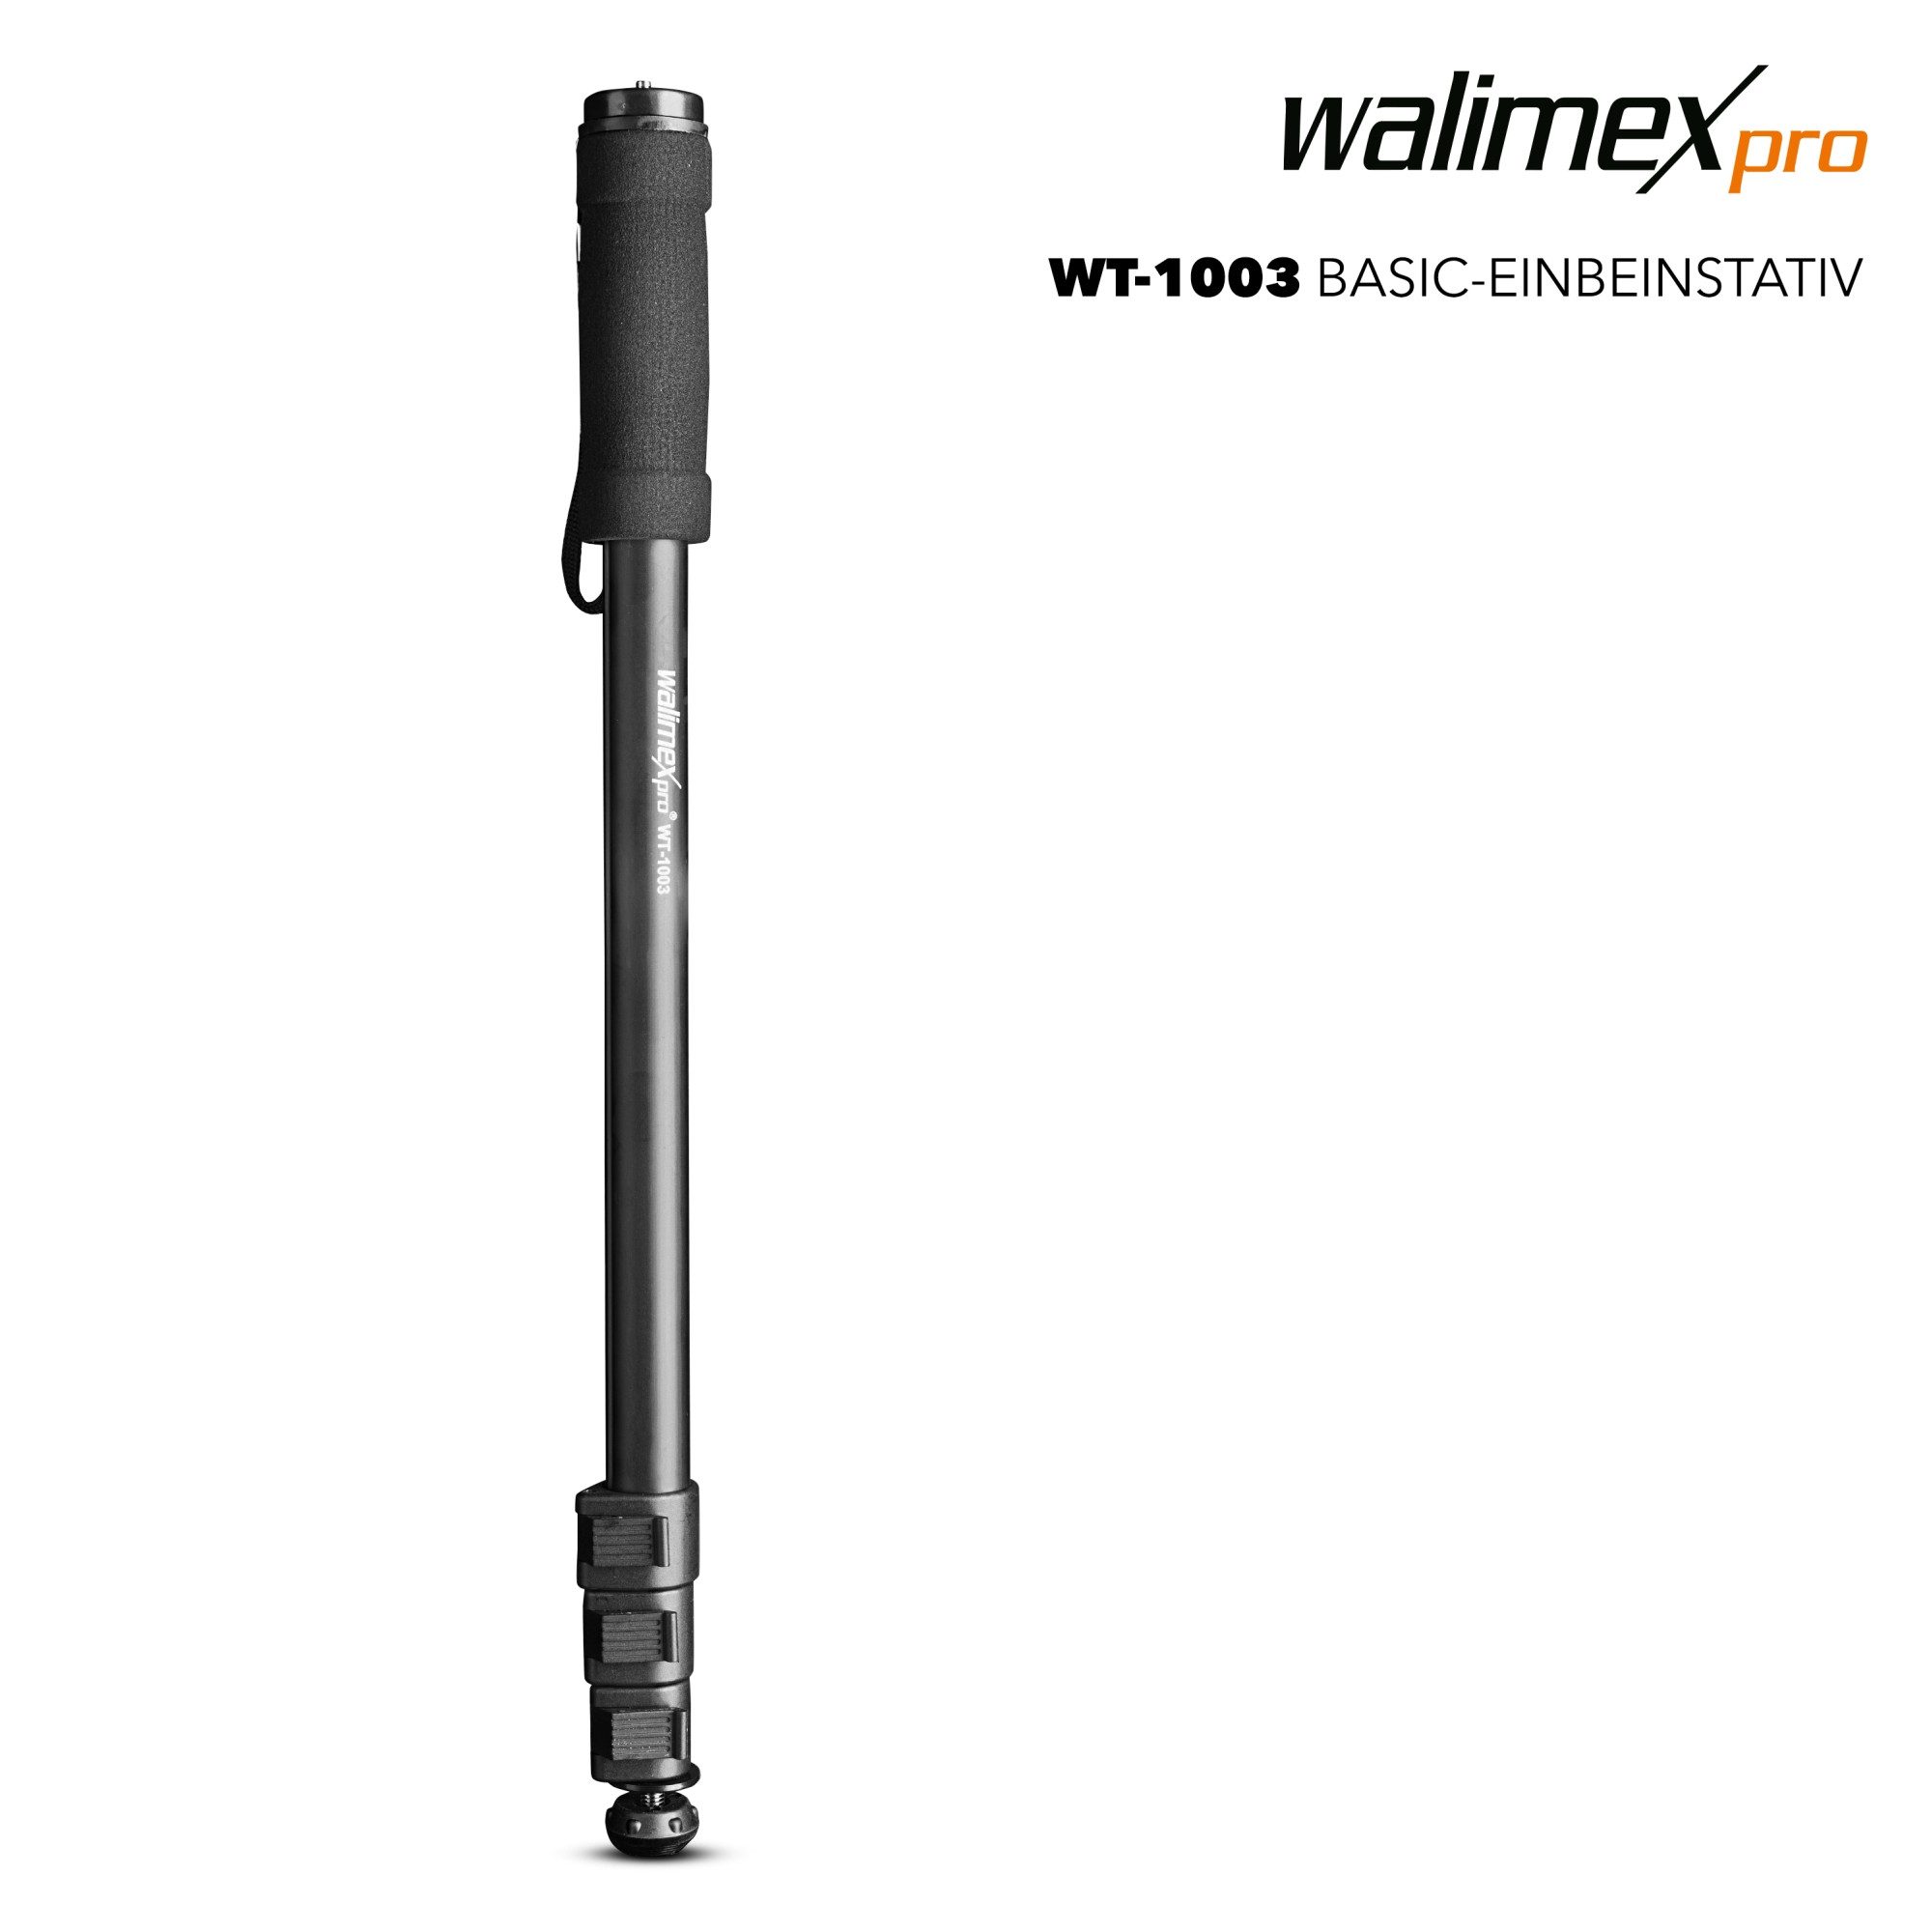 Walimex Pro WT-1003 Basic Einbeinstativ 171cm Einbeinstativ